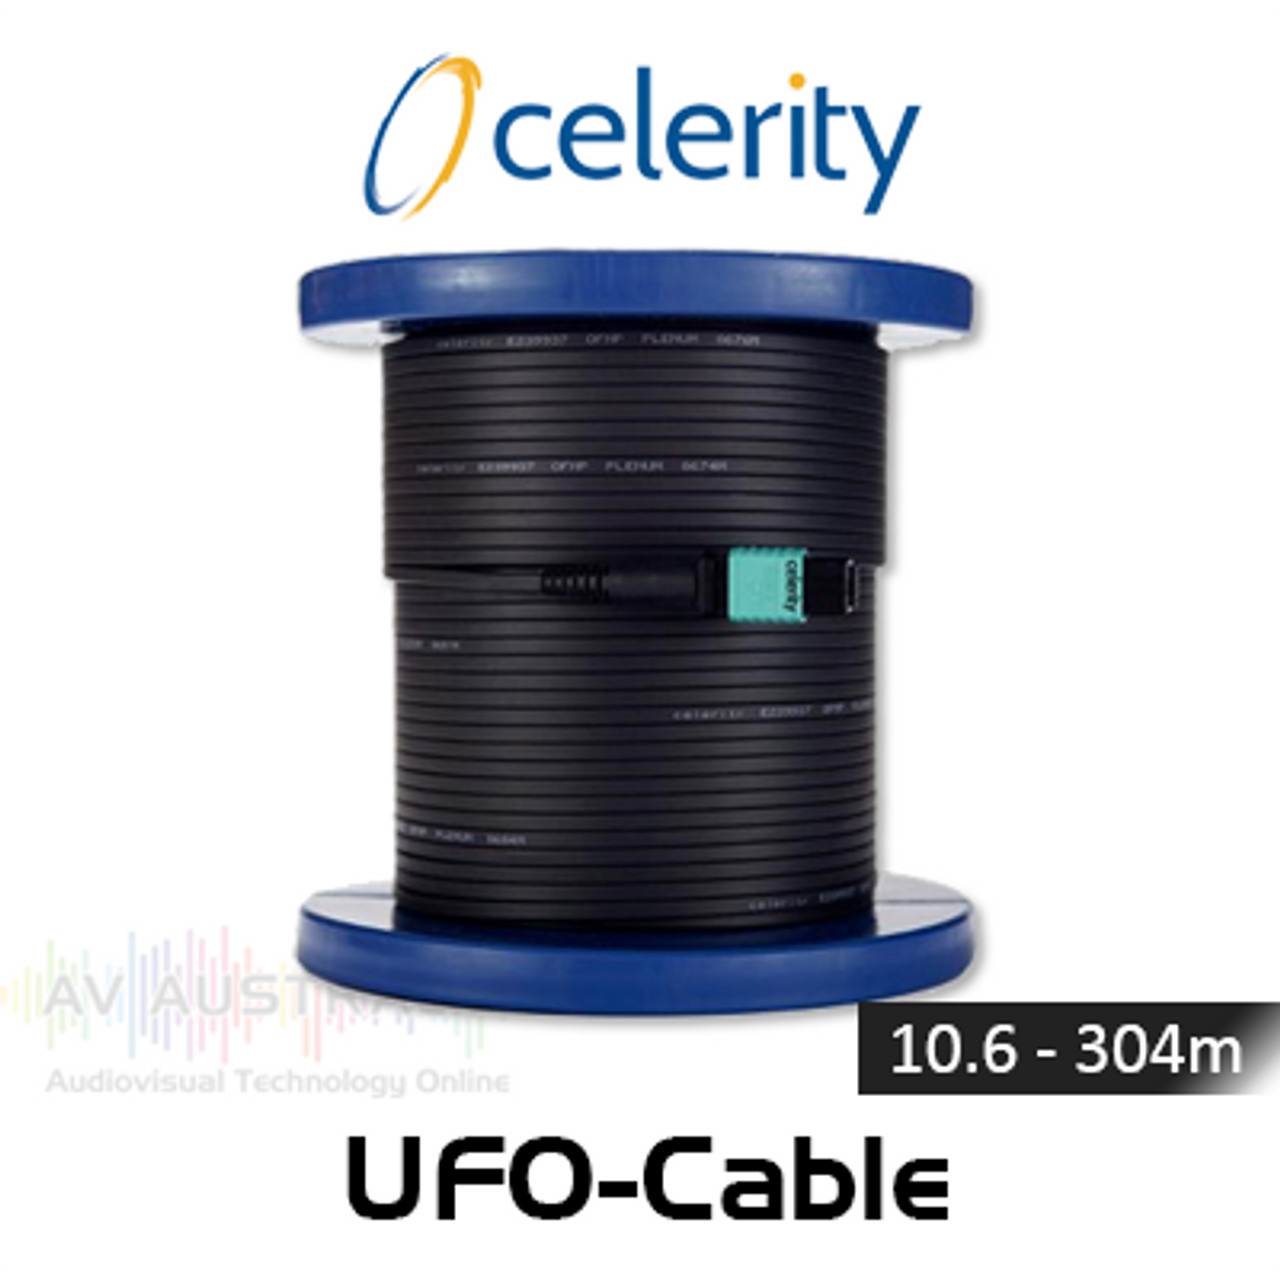 Celerity Universal Fiber Optic Cable (10-304m)